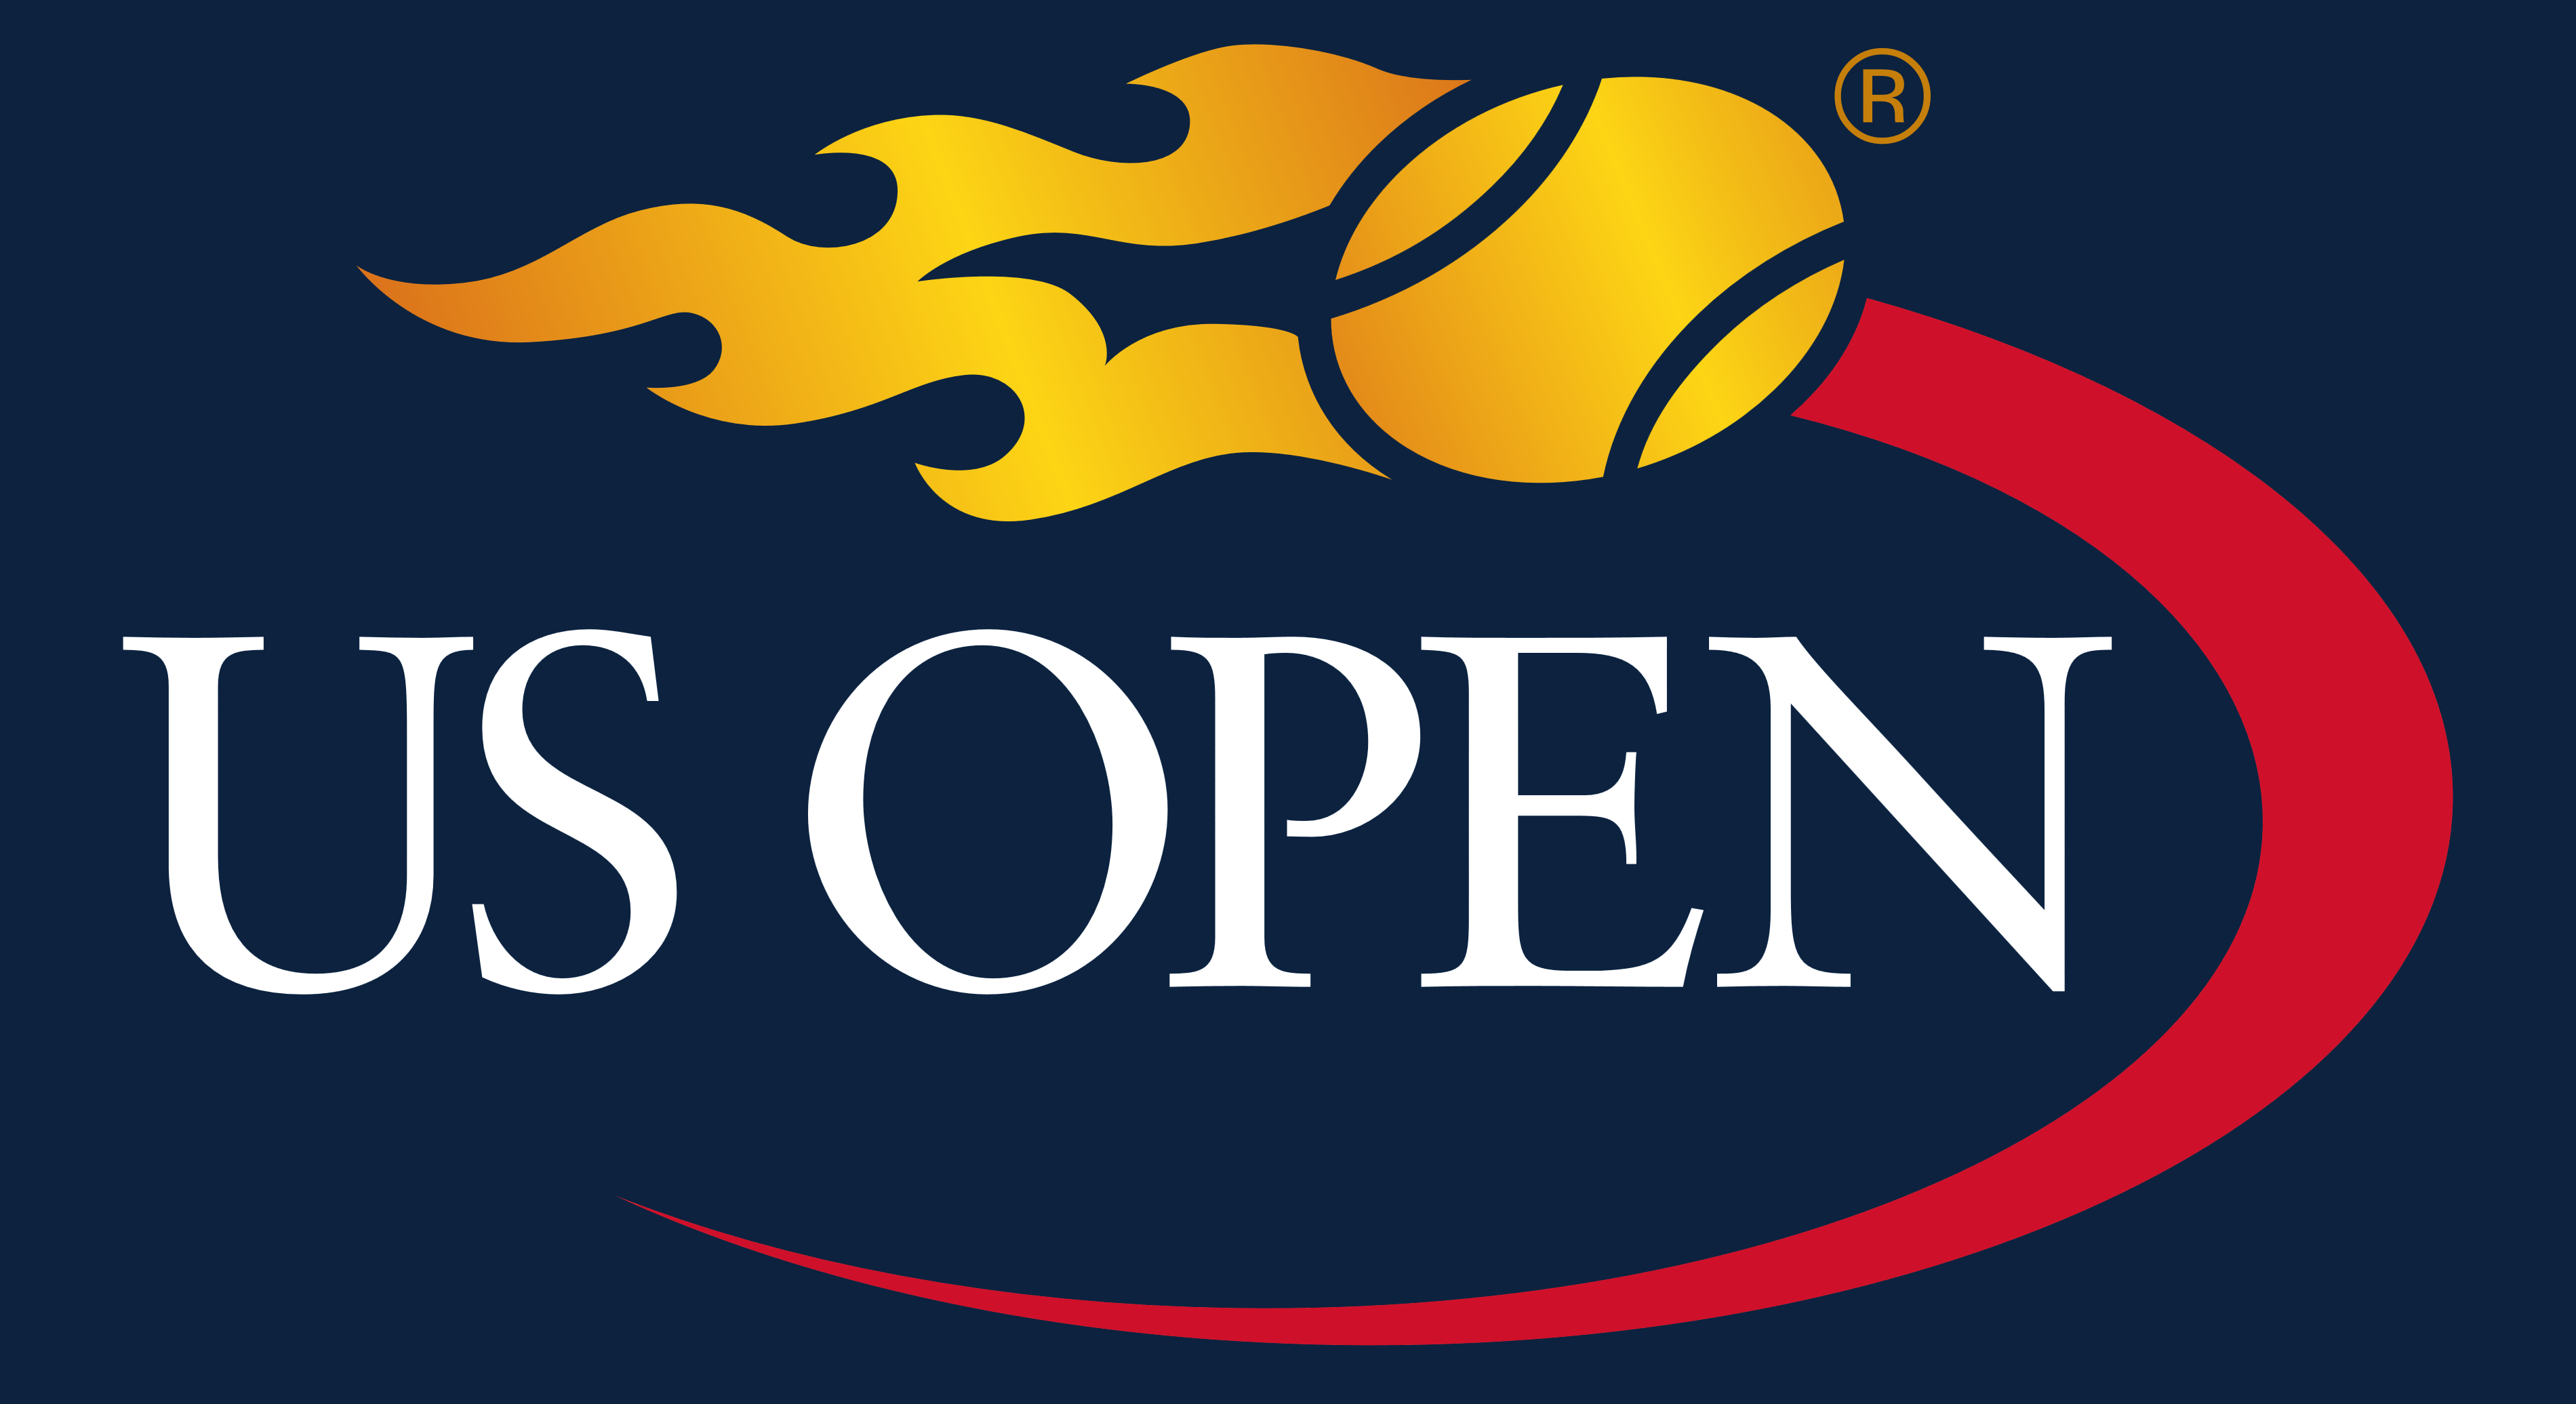 US Open Logos Download